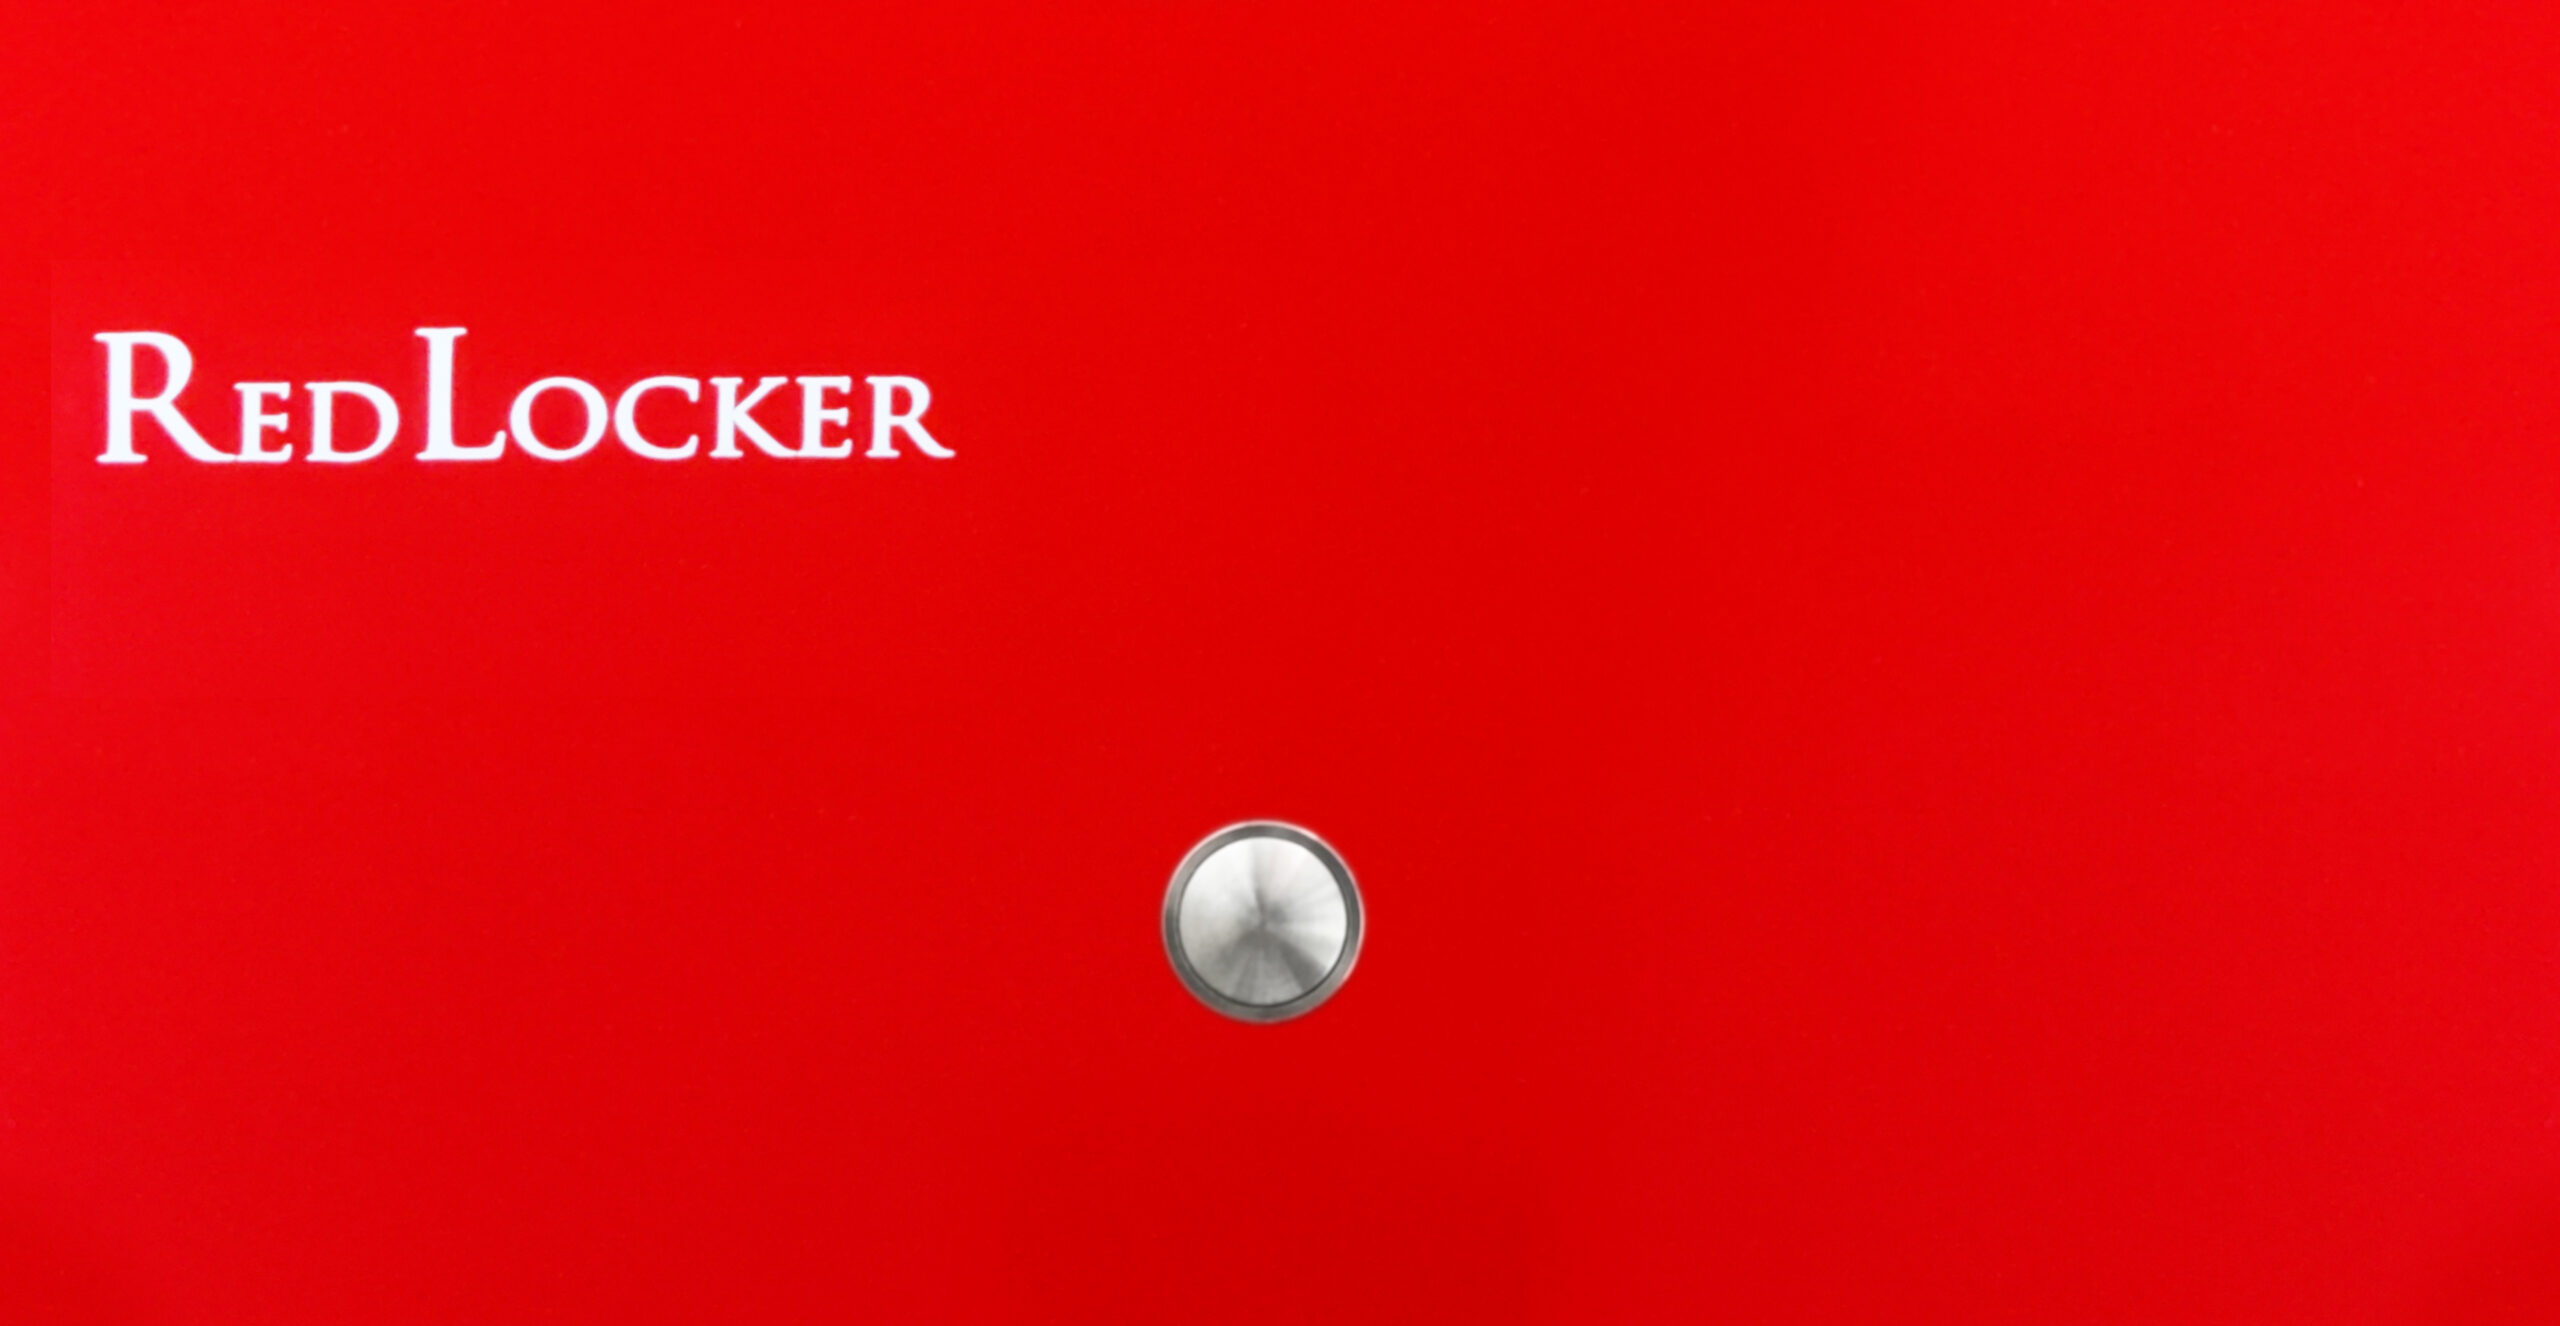 RedLocker